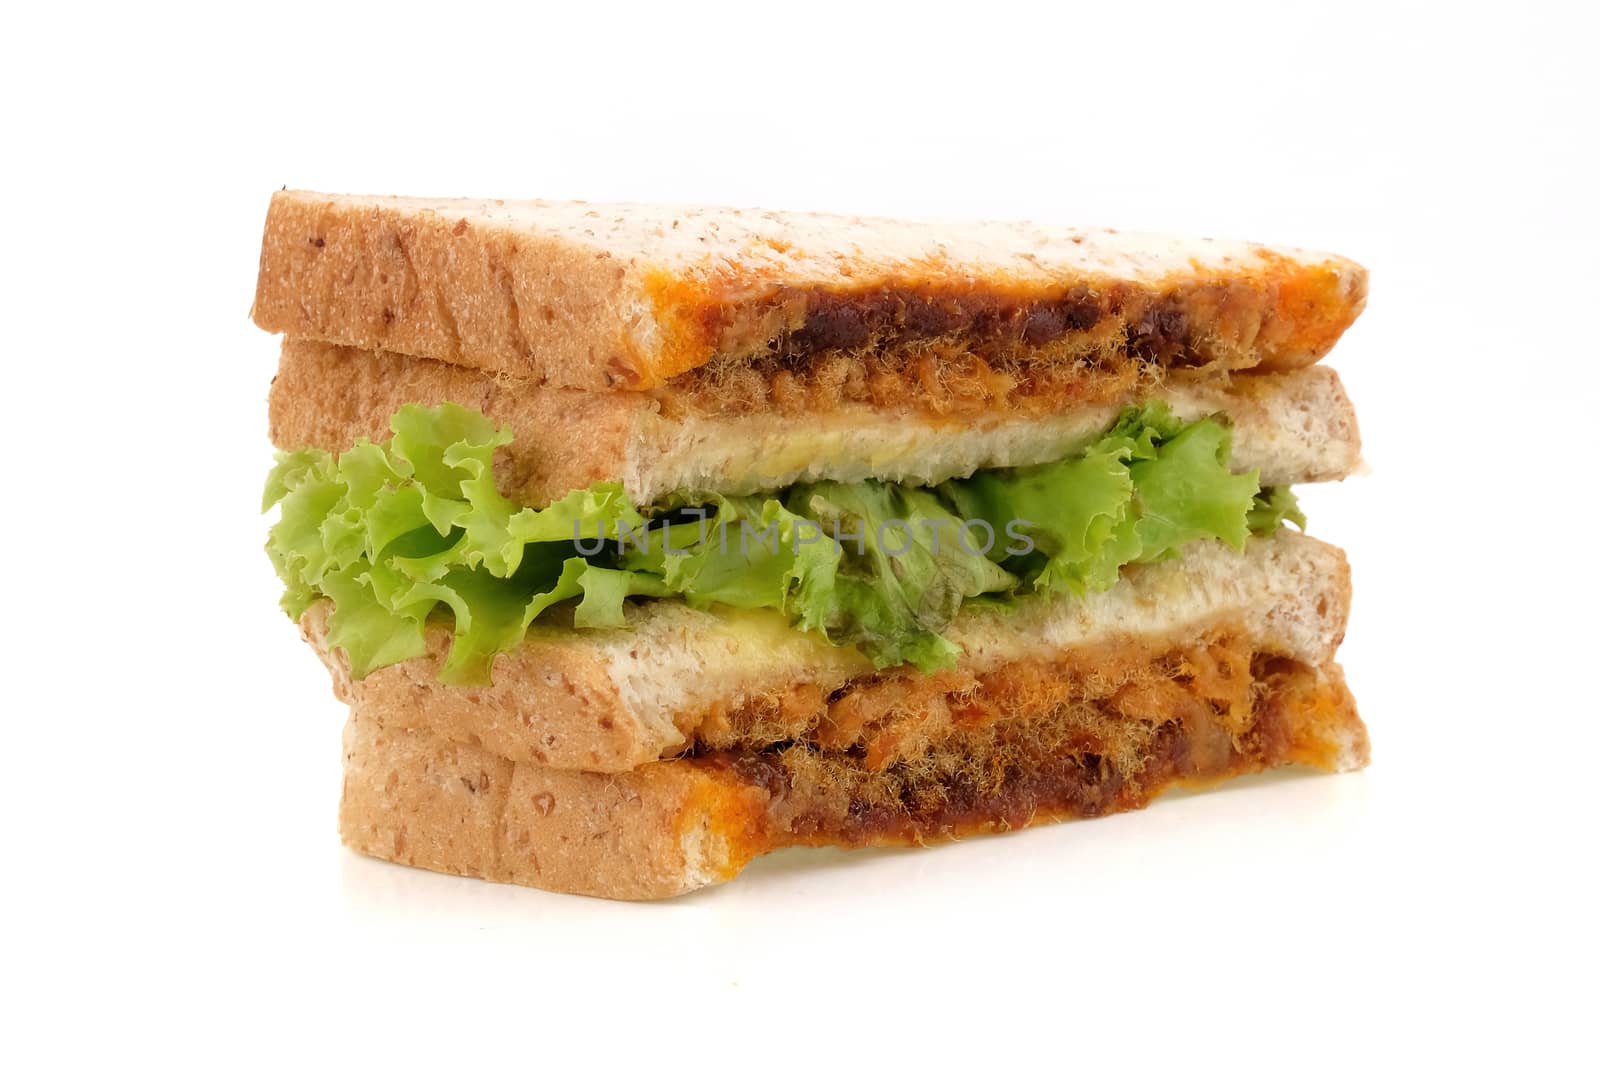 Sandwich vertical on white background.